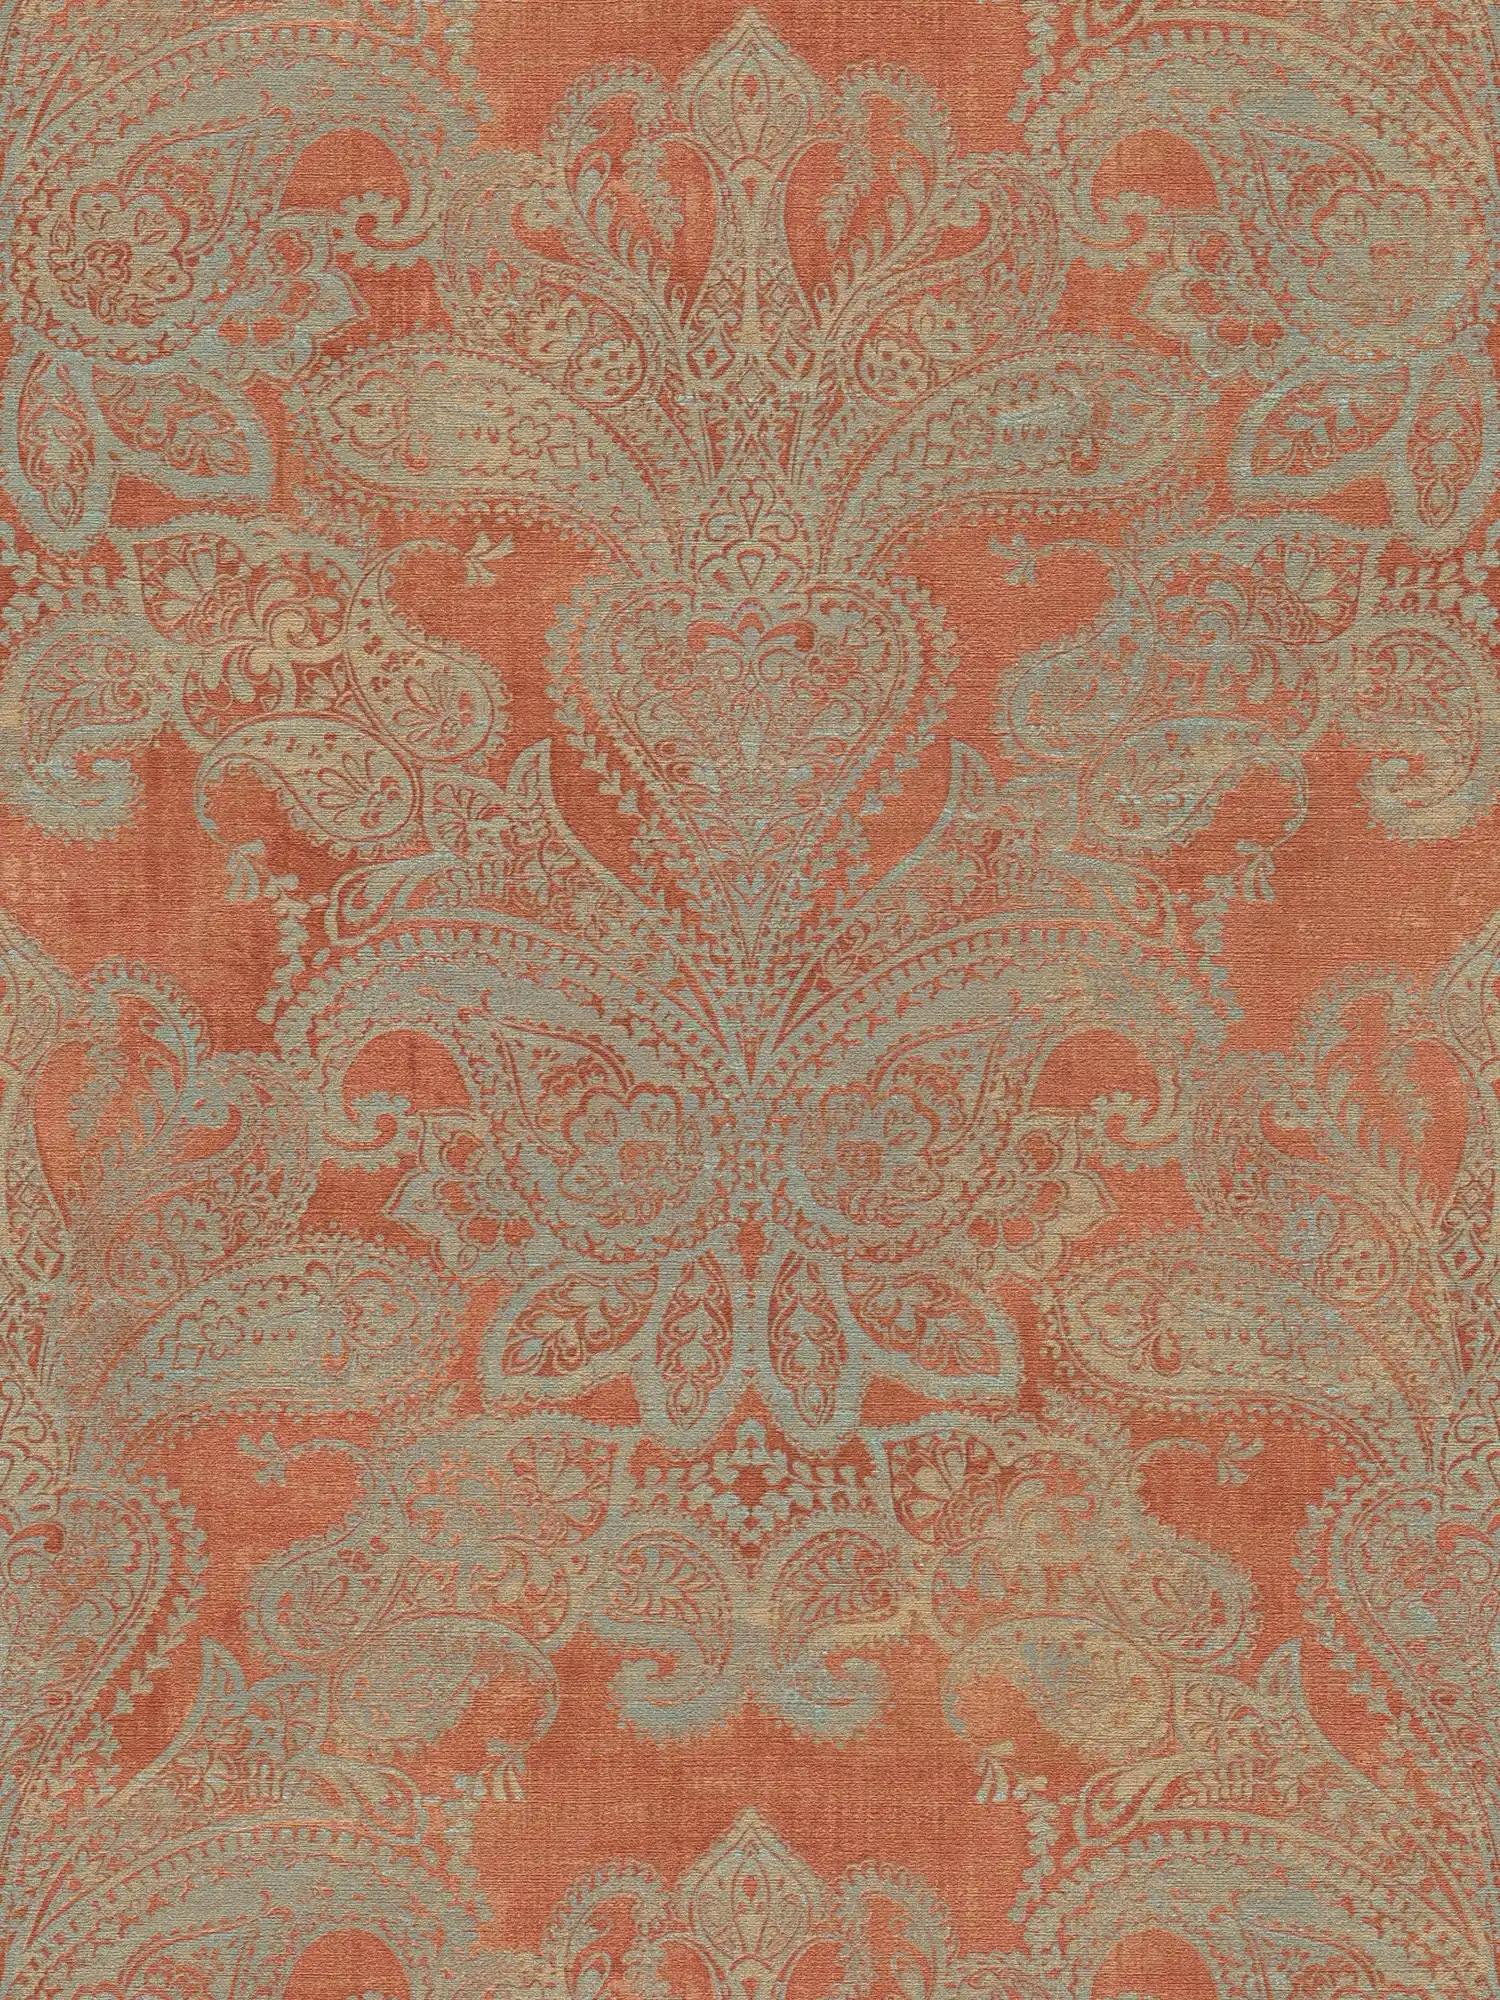         Vliestapete im Barockstil mit Ornamenten – Orange, Türkis, Grau
    